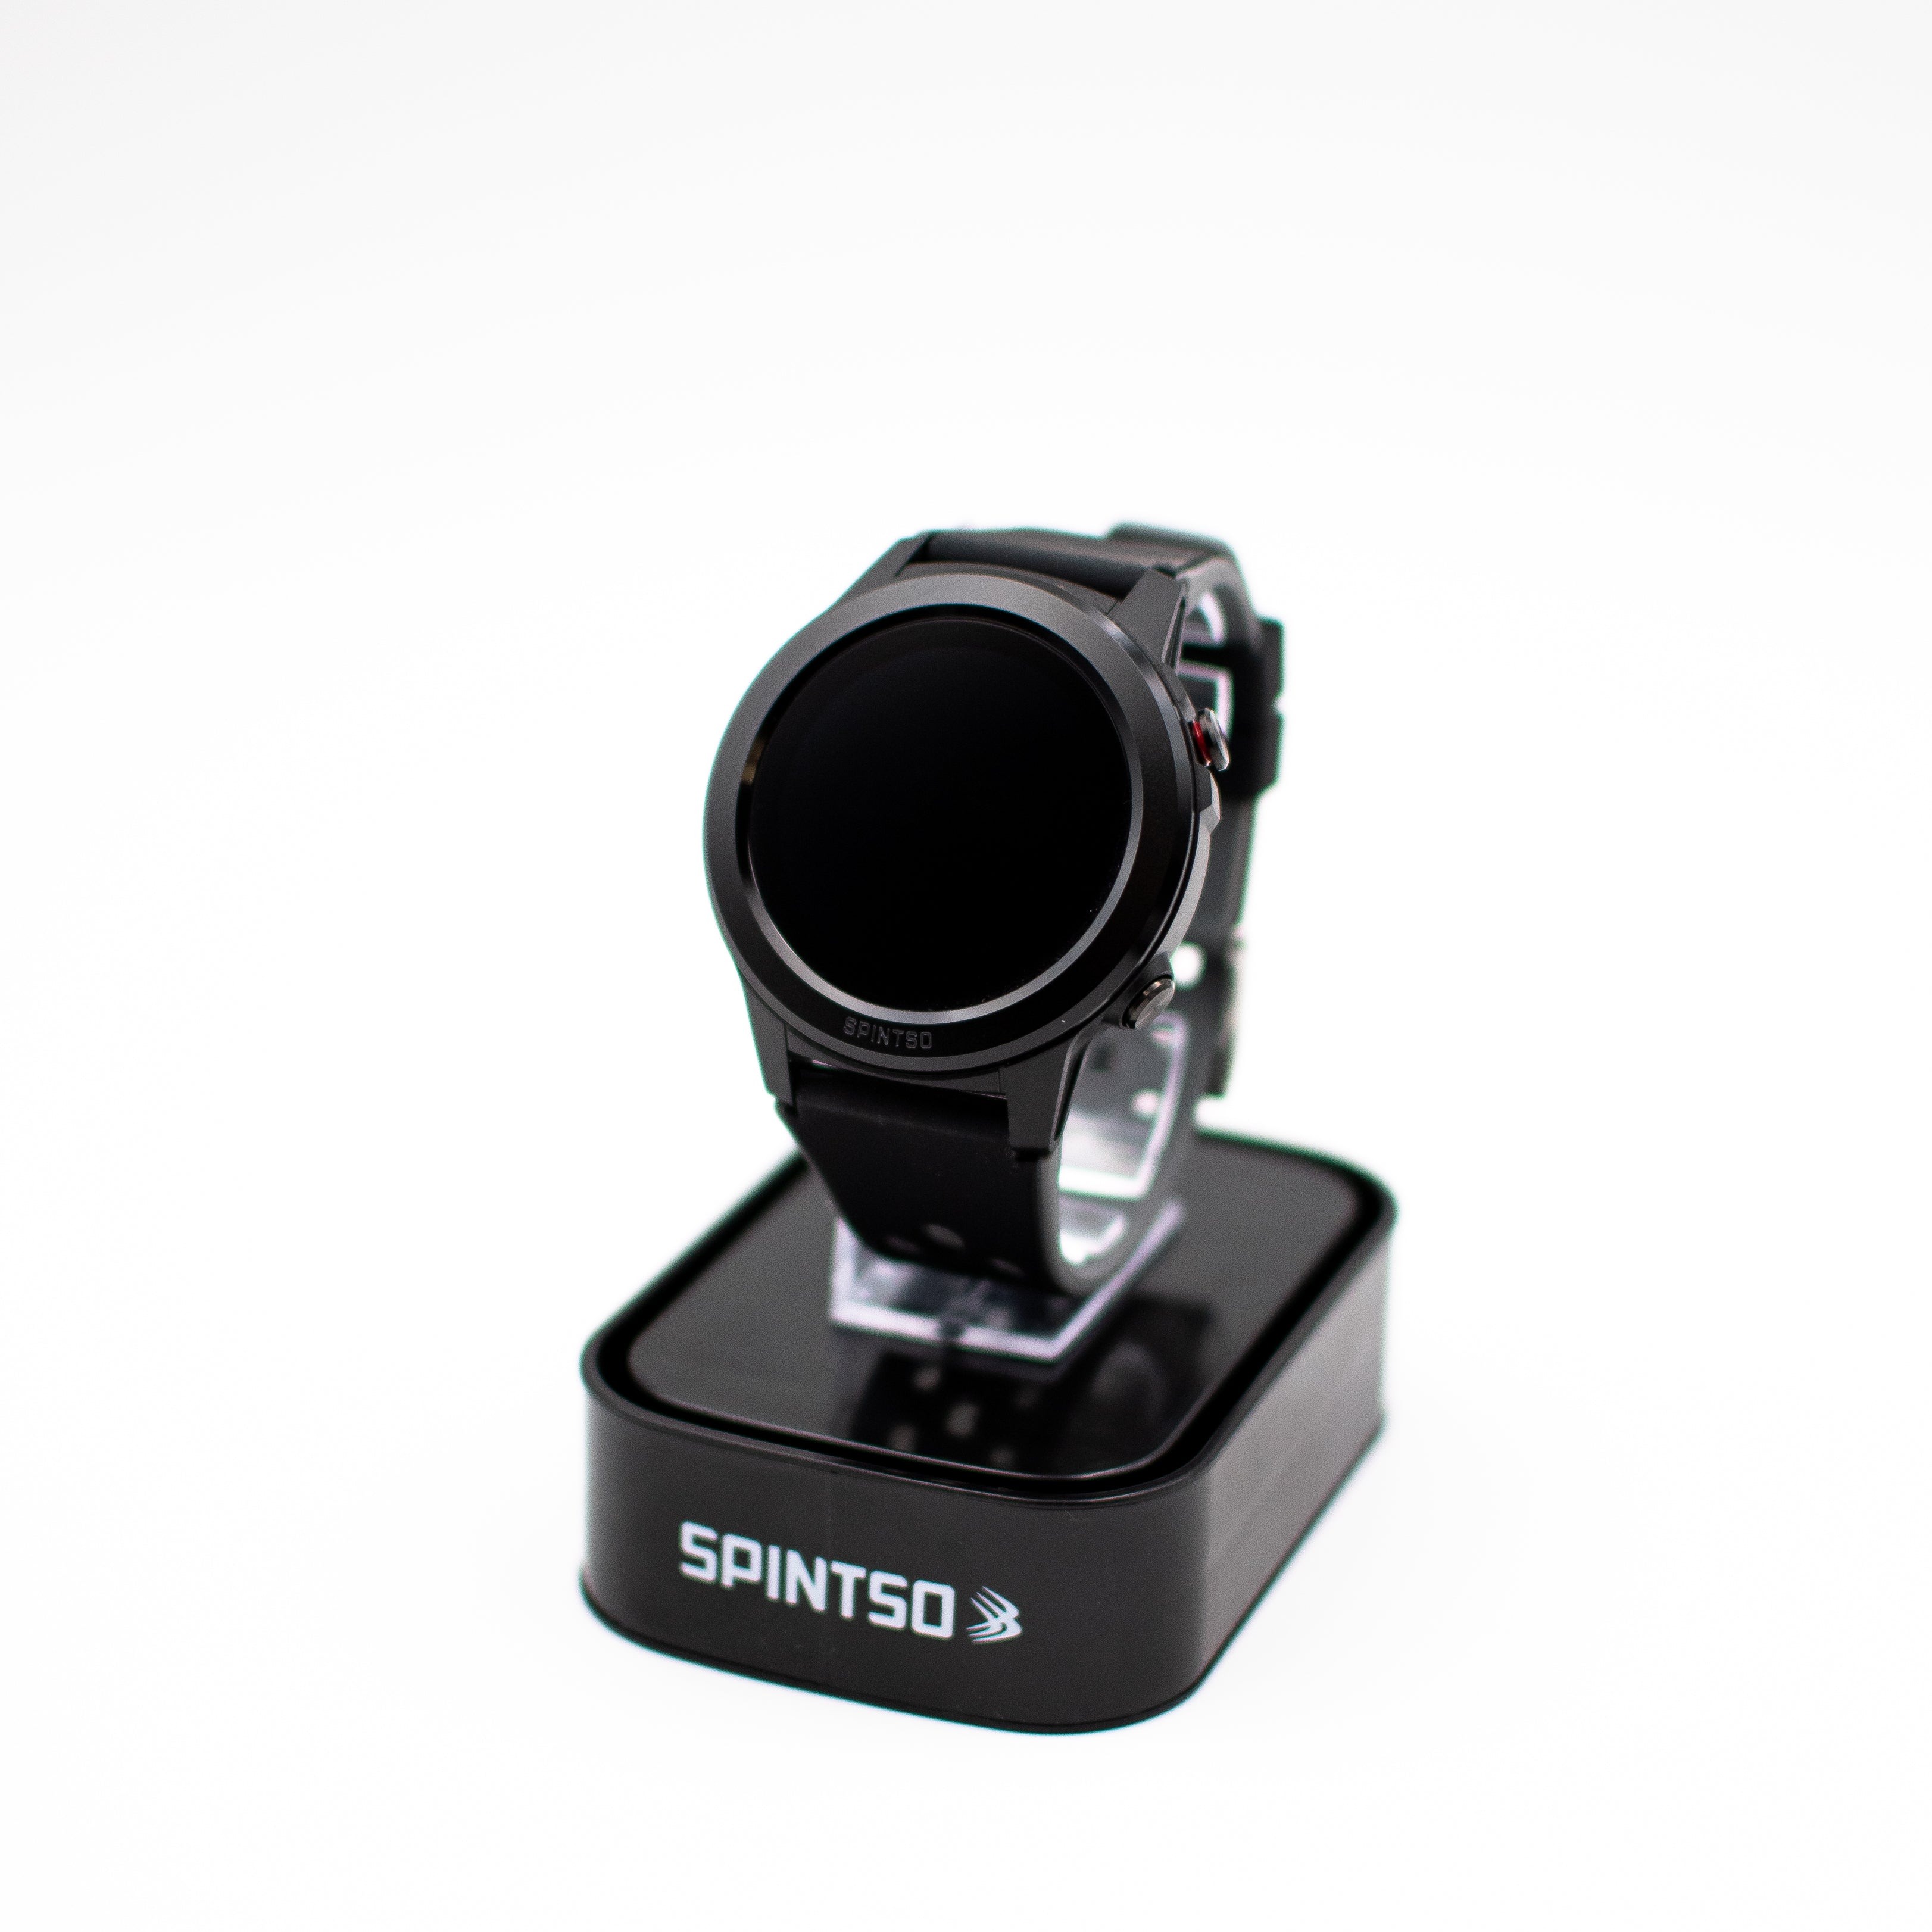 SPINTSO S1 Pro Referee Watch with GPS - A&H International